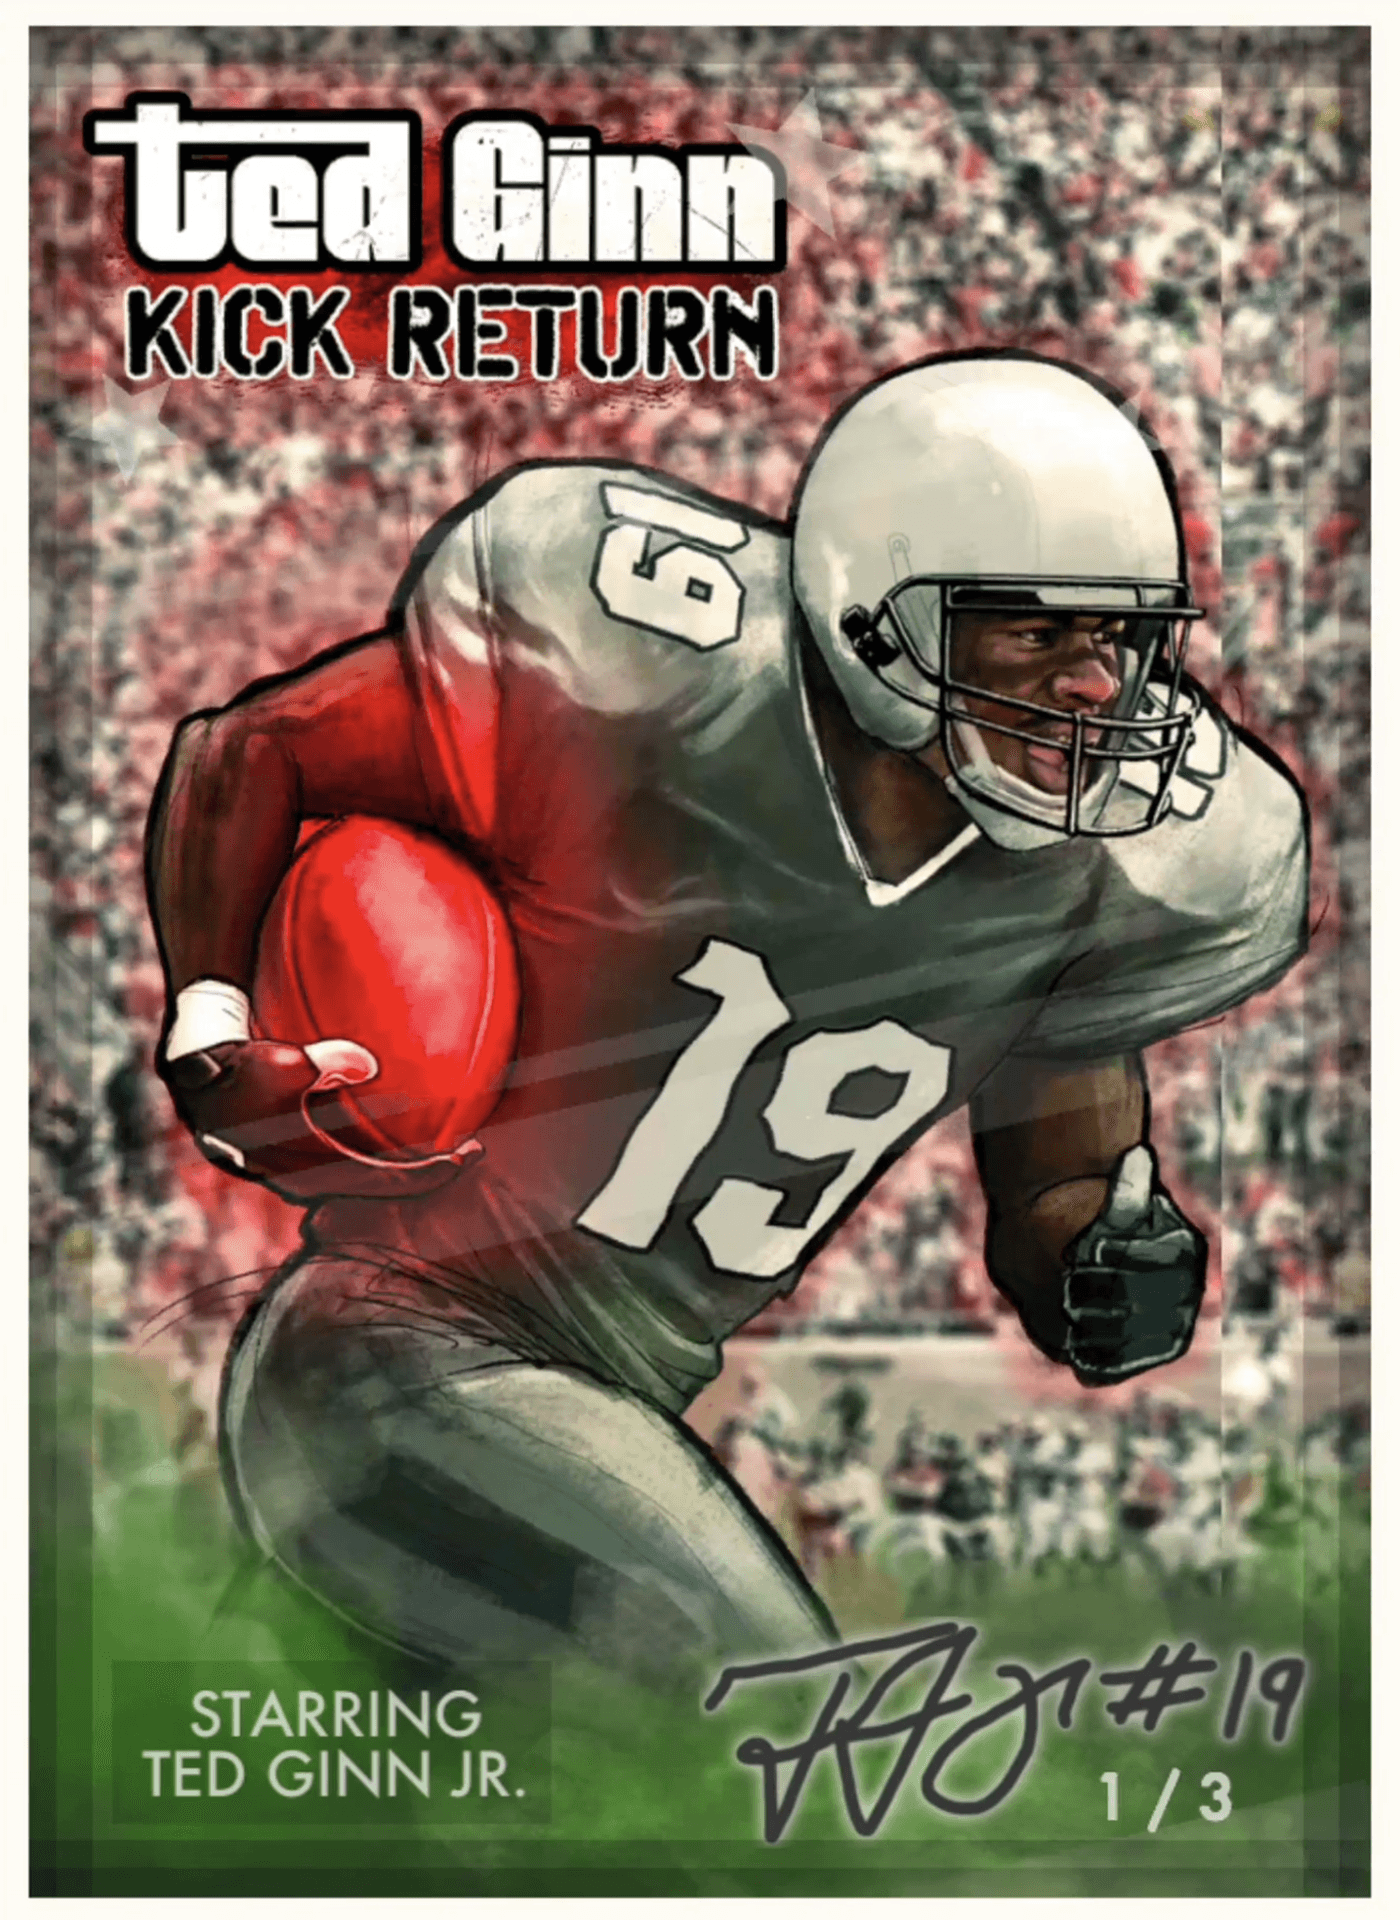 Ted Ginn: Kick Return - Pro Career (Edition 1/3)